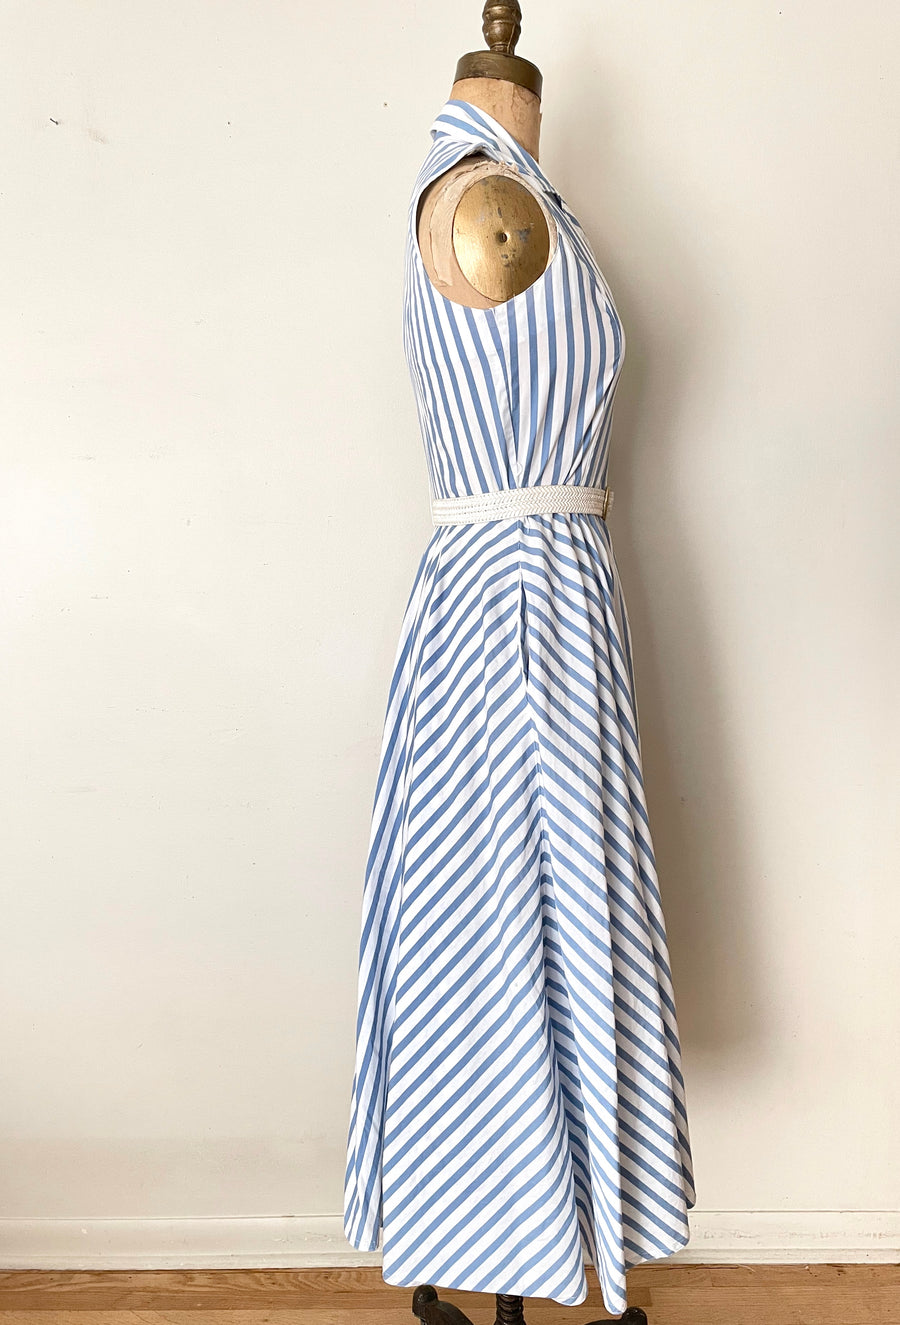 1980's Blue & White Striped Cotton Dress - Size Small